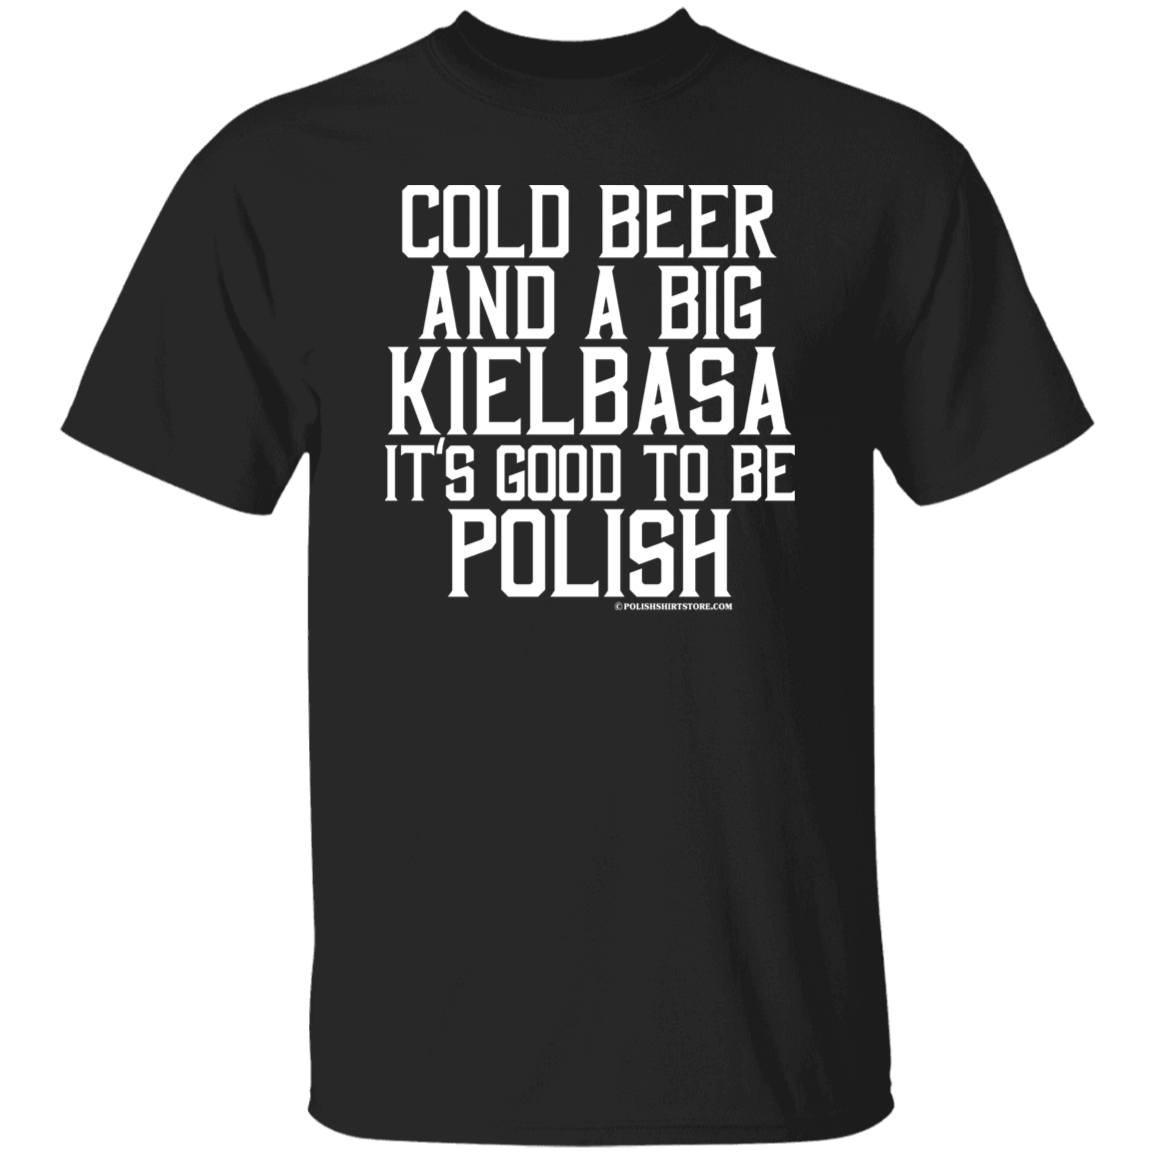 Cold Beer And A Big Kielbasa It's Good To Be Polish Apparel CustomCat G500 5.3 oz. T-Shirt Black S